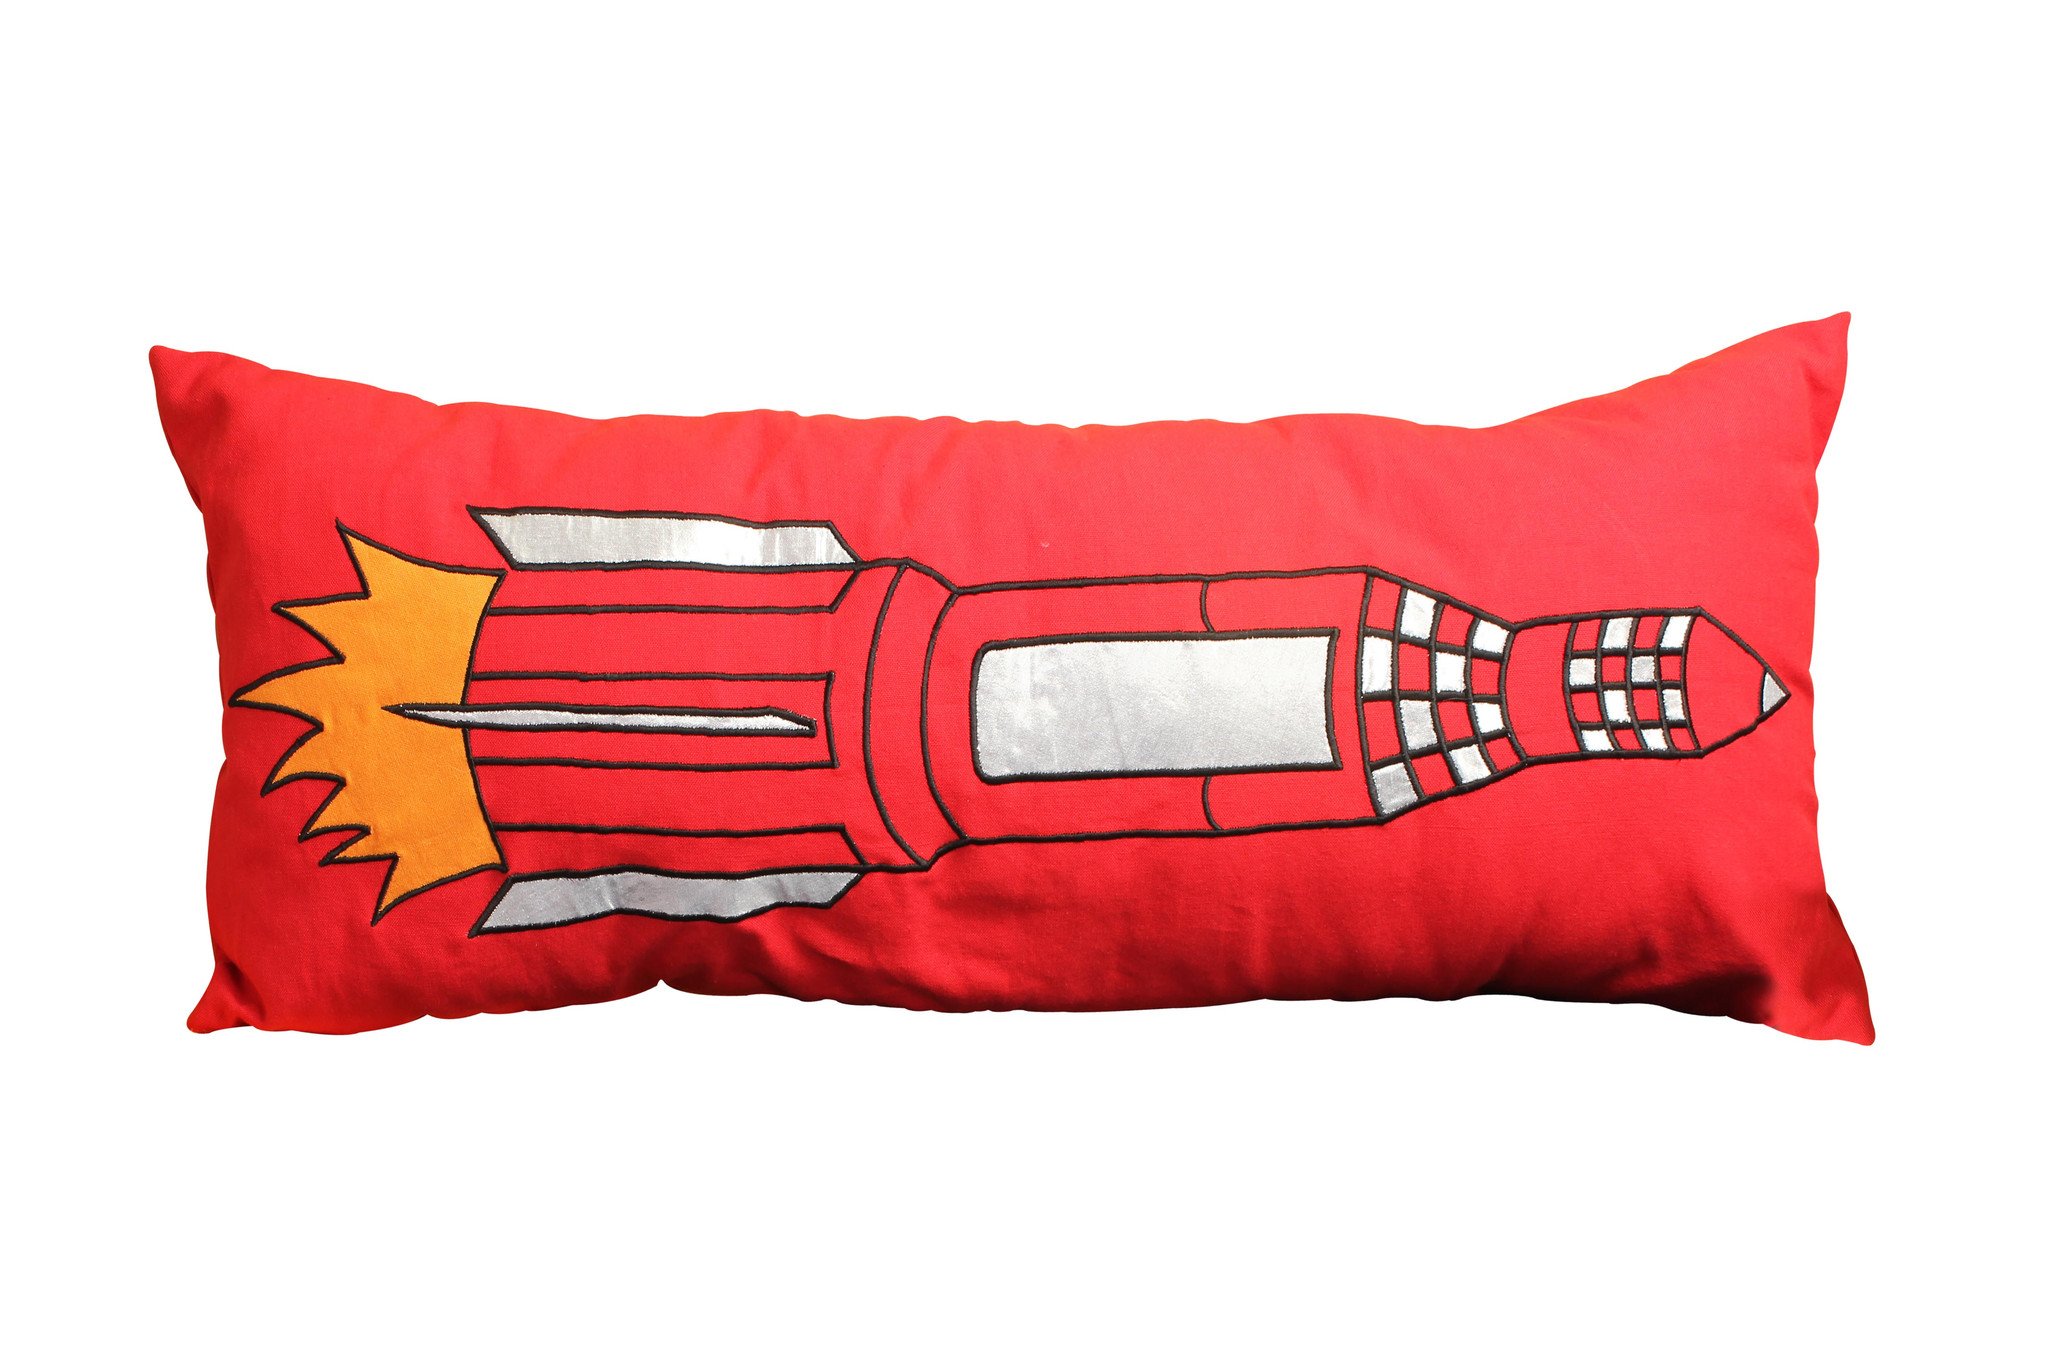 Red Rocket Cushions Shake Up Soft Furnishings